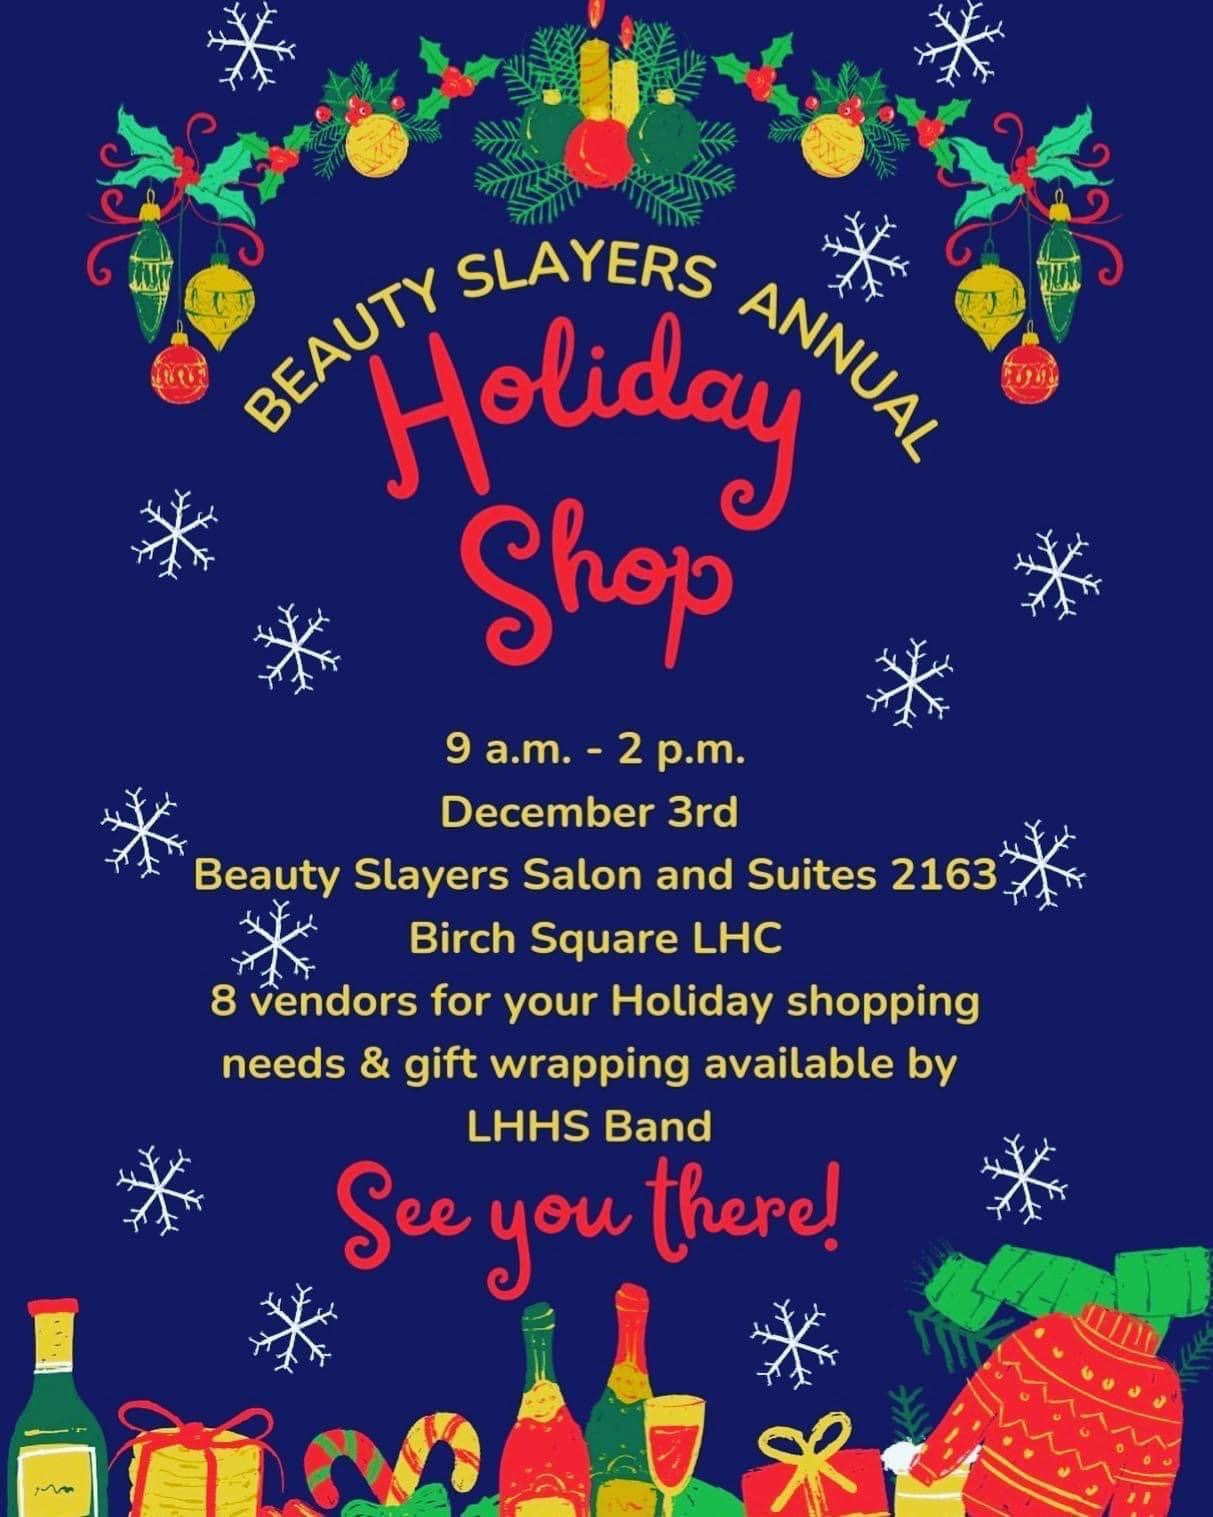 Beauty Slayers Annual Holiday Shop